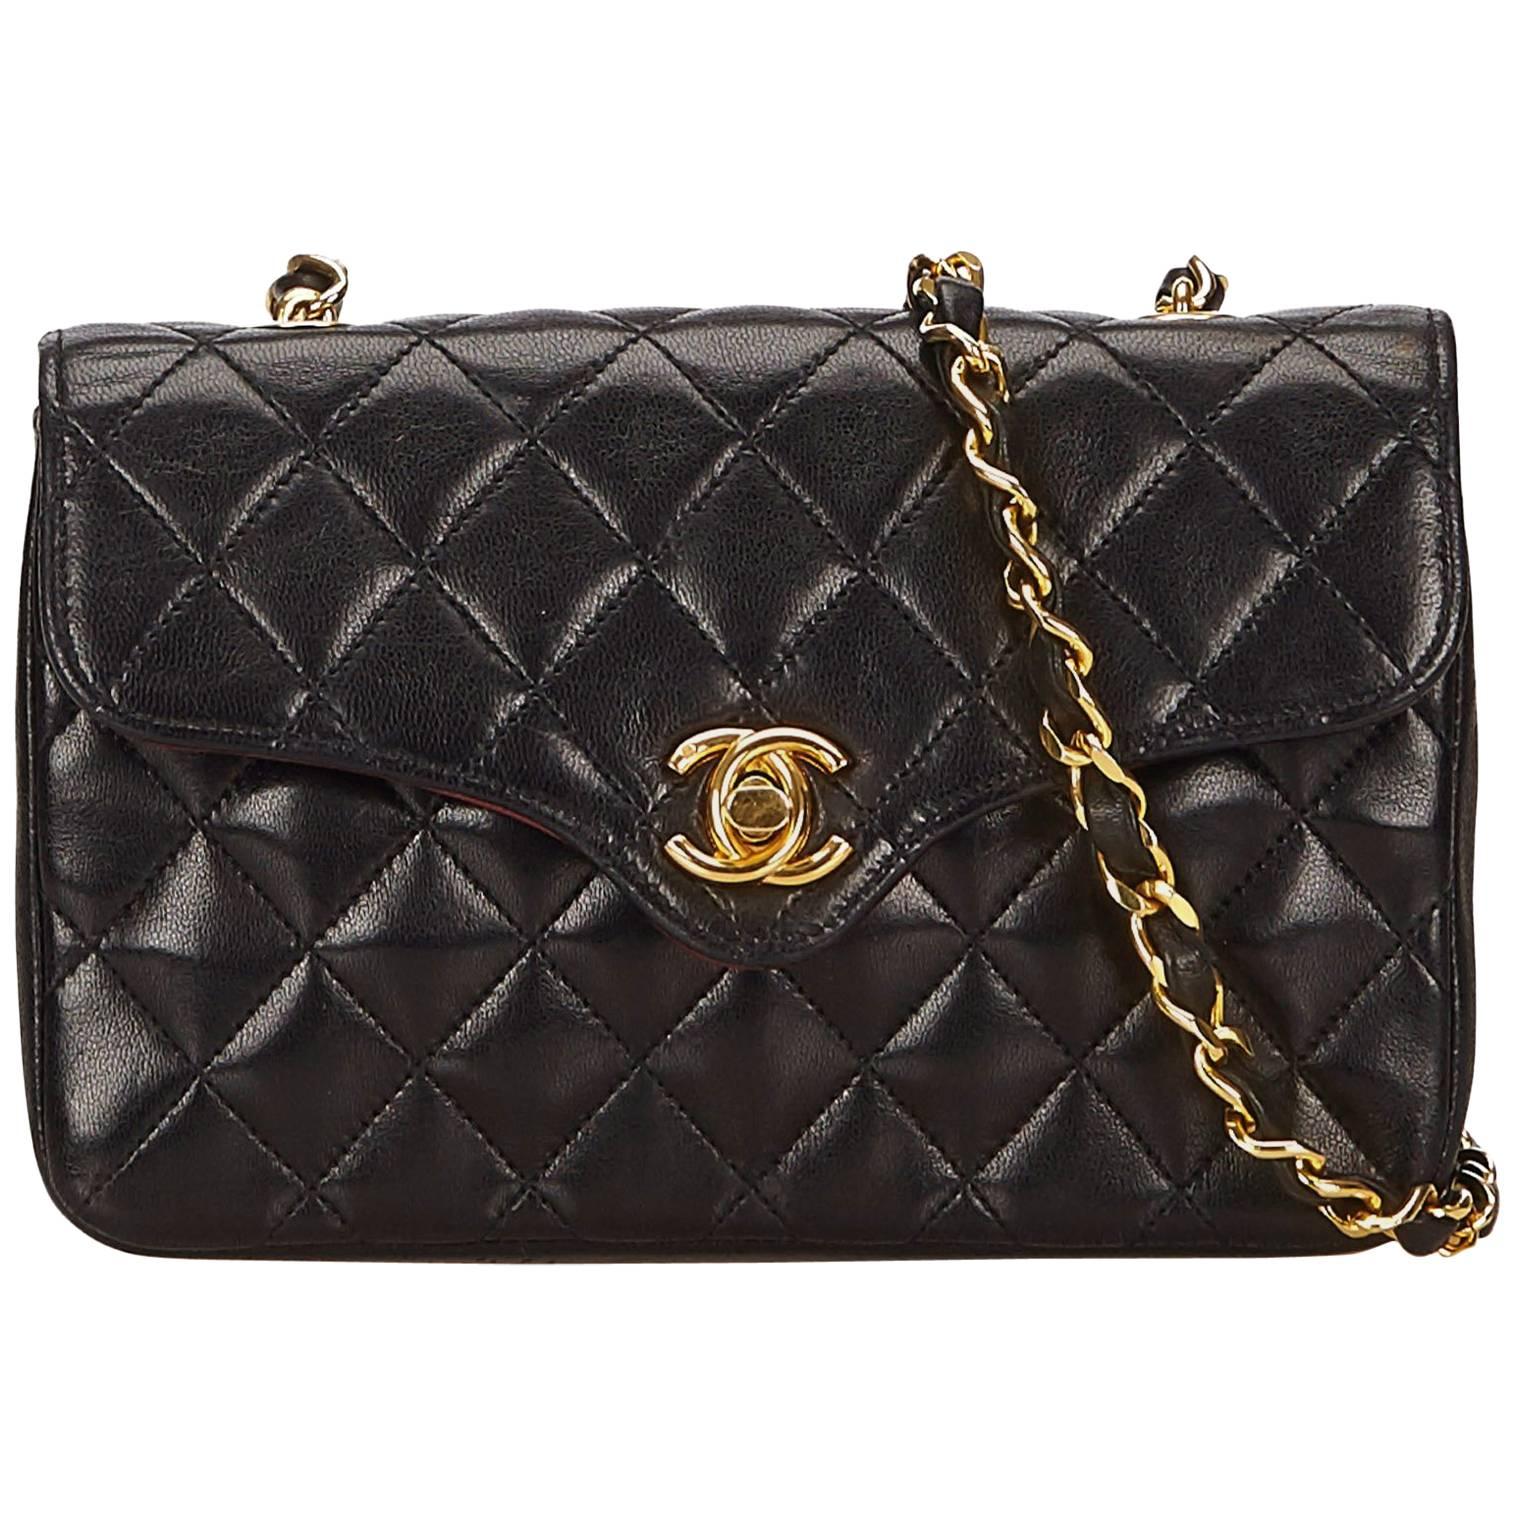 Chanel Black Mini Matelasse Quilted Lambskin Leather Shoulder Bag